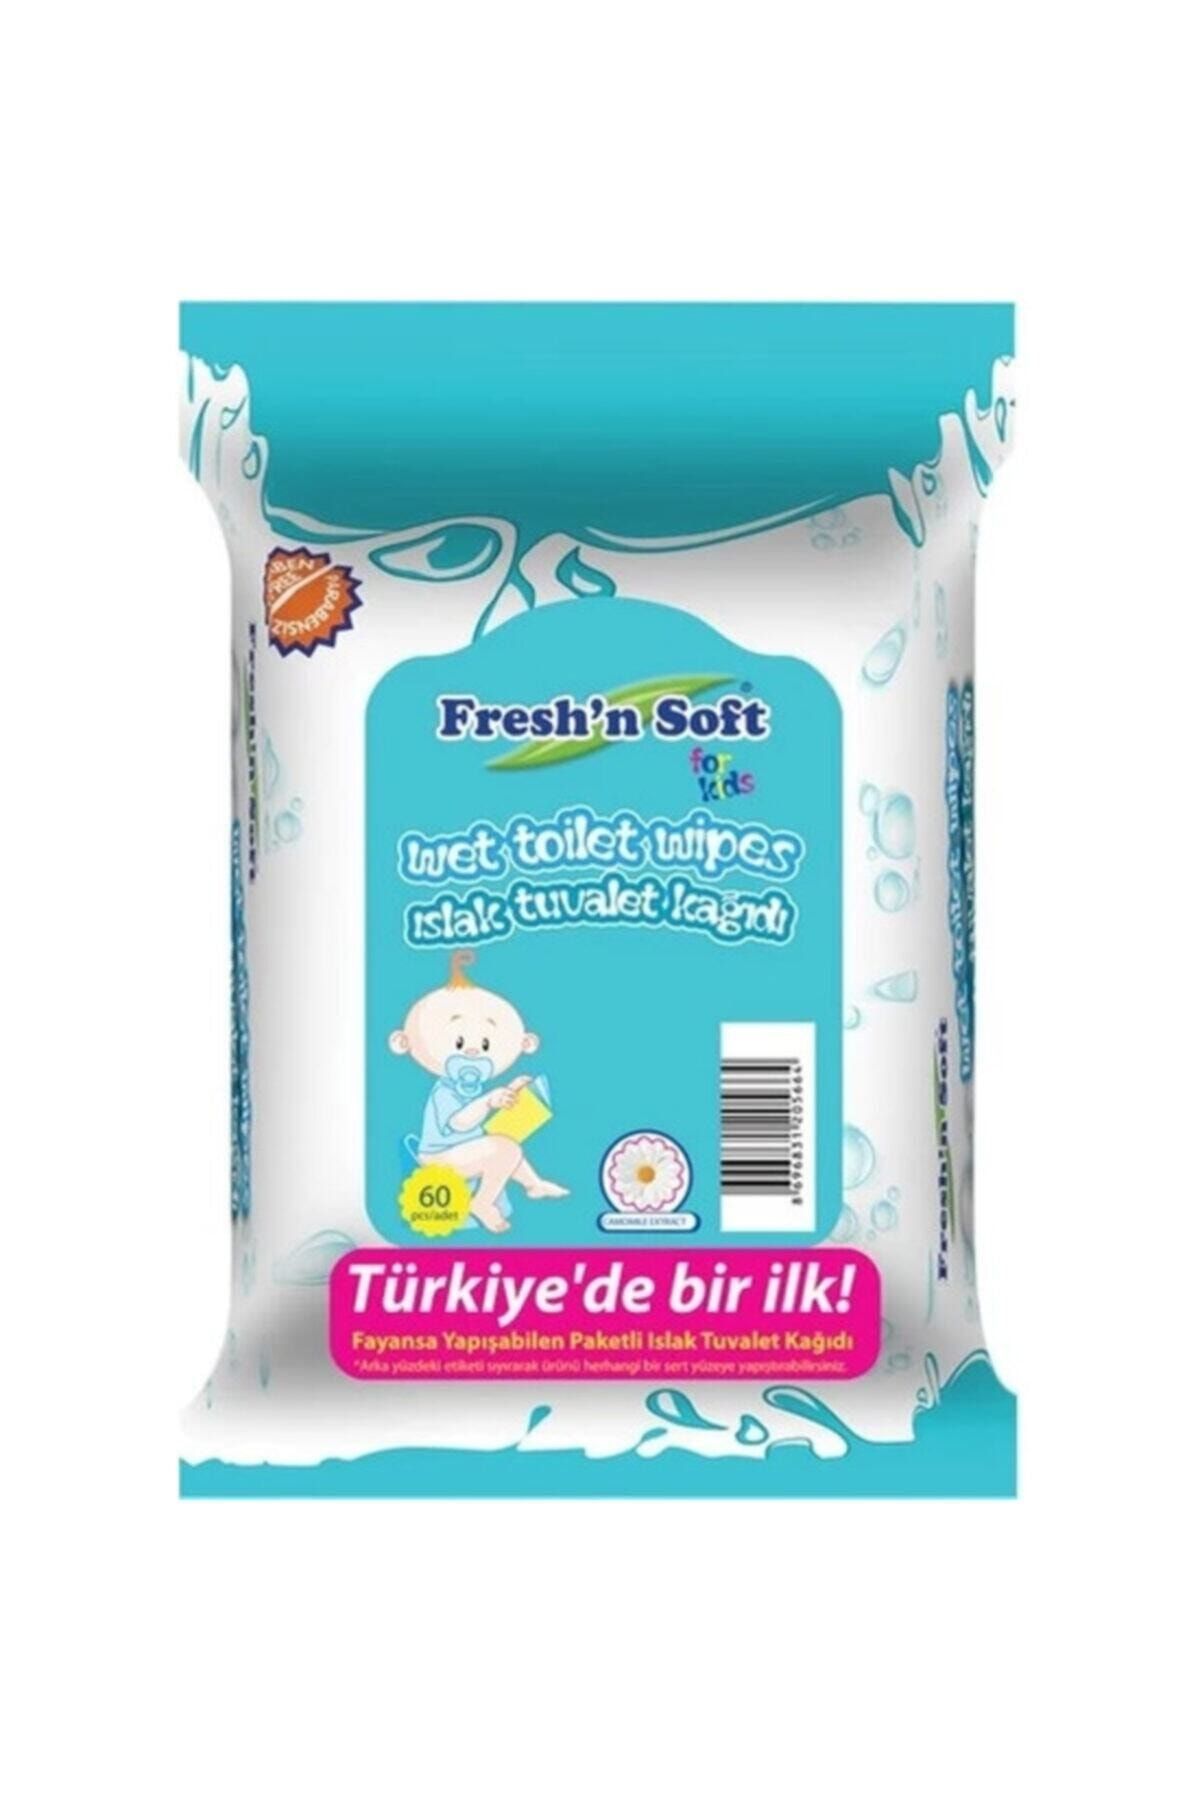 FRESHNSOFT Fresh'n Soft Islak Tuvalet Kağıdı Çocuklara Özel 60'lı 2 Paket